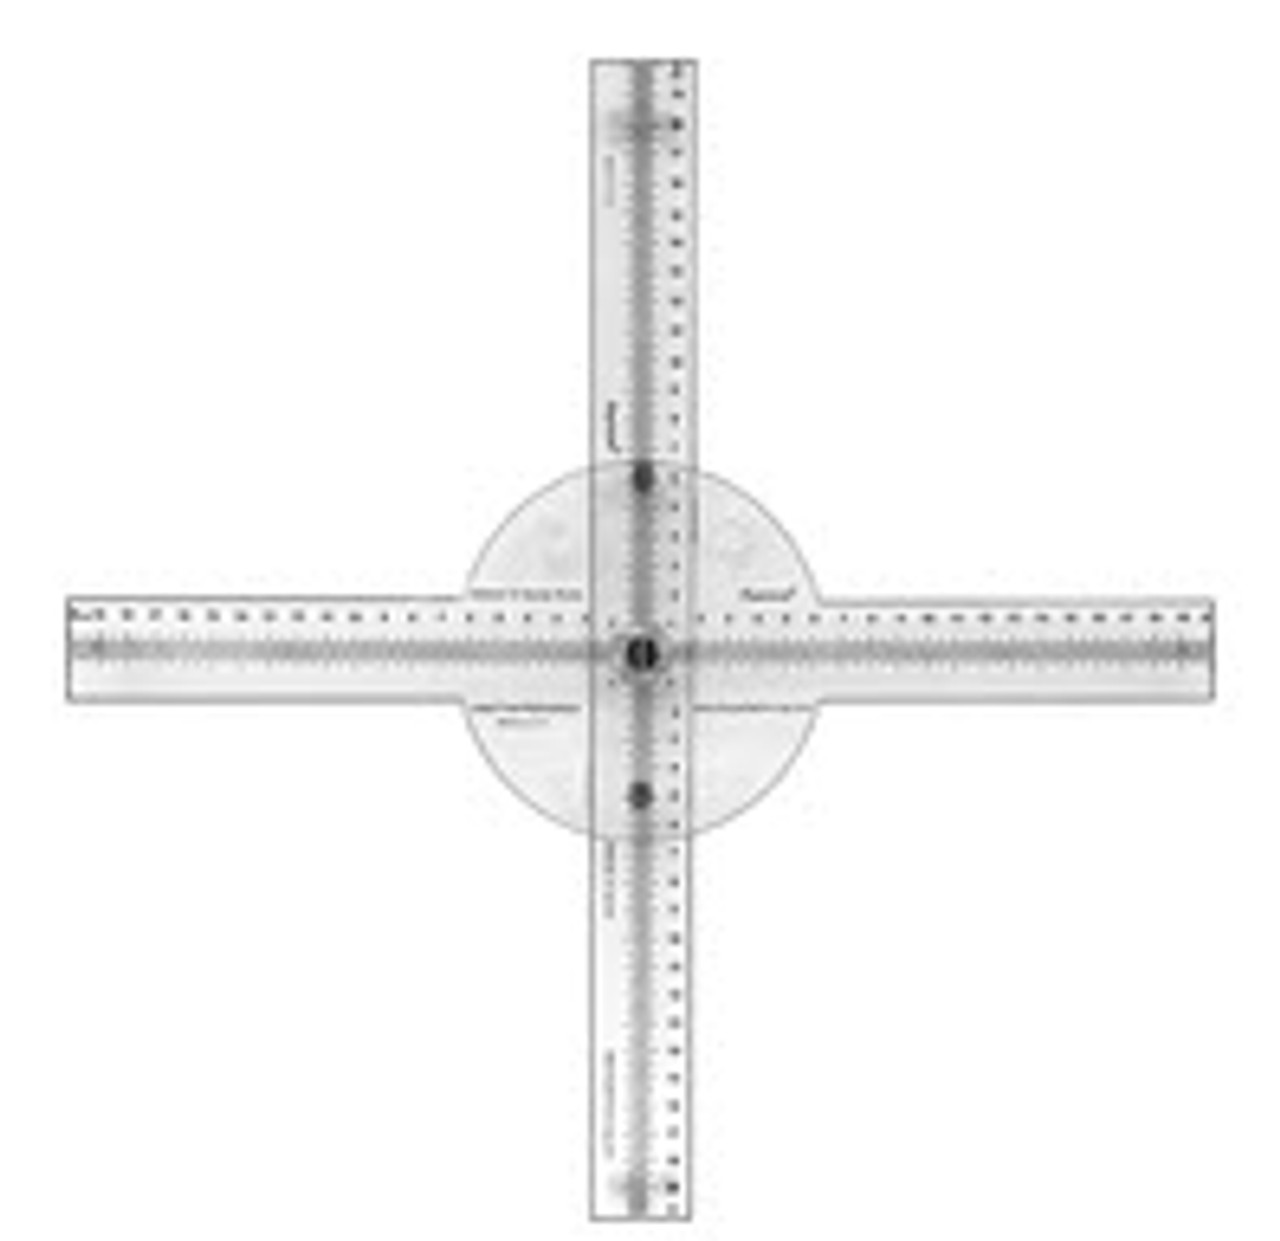 Buy Radiopaque X-Ray Ruler - Lead Free - Acrylic - 50mm '0' Centered